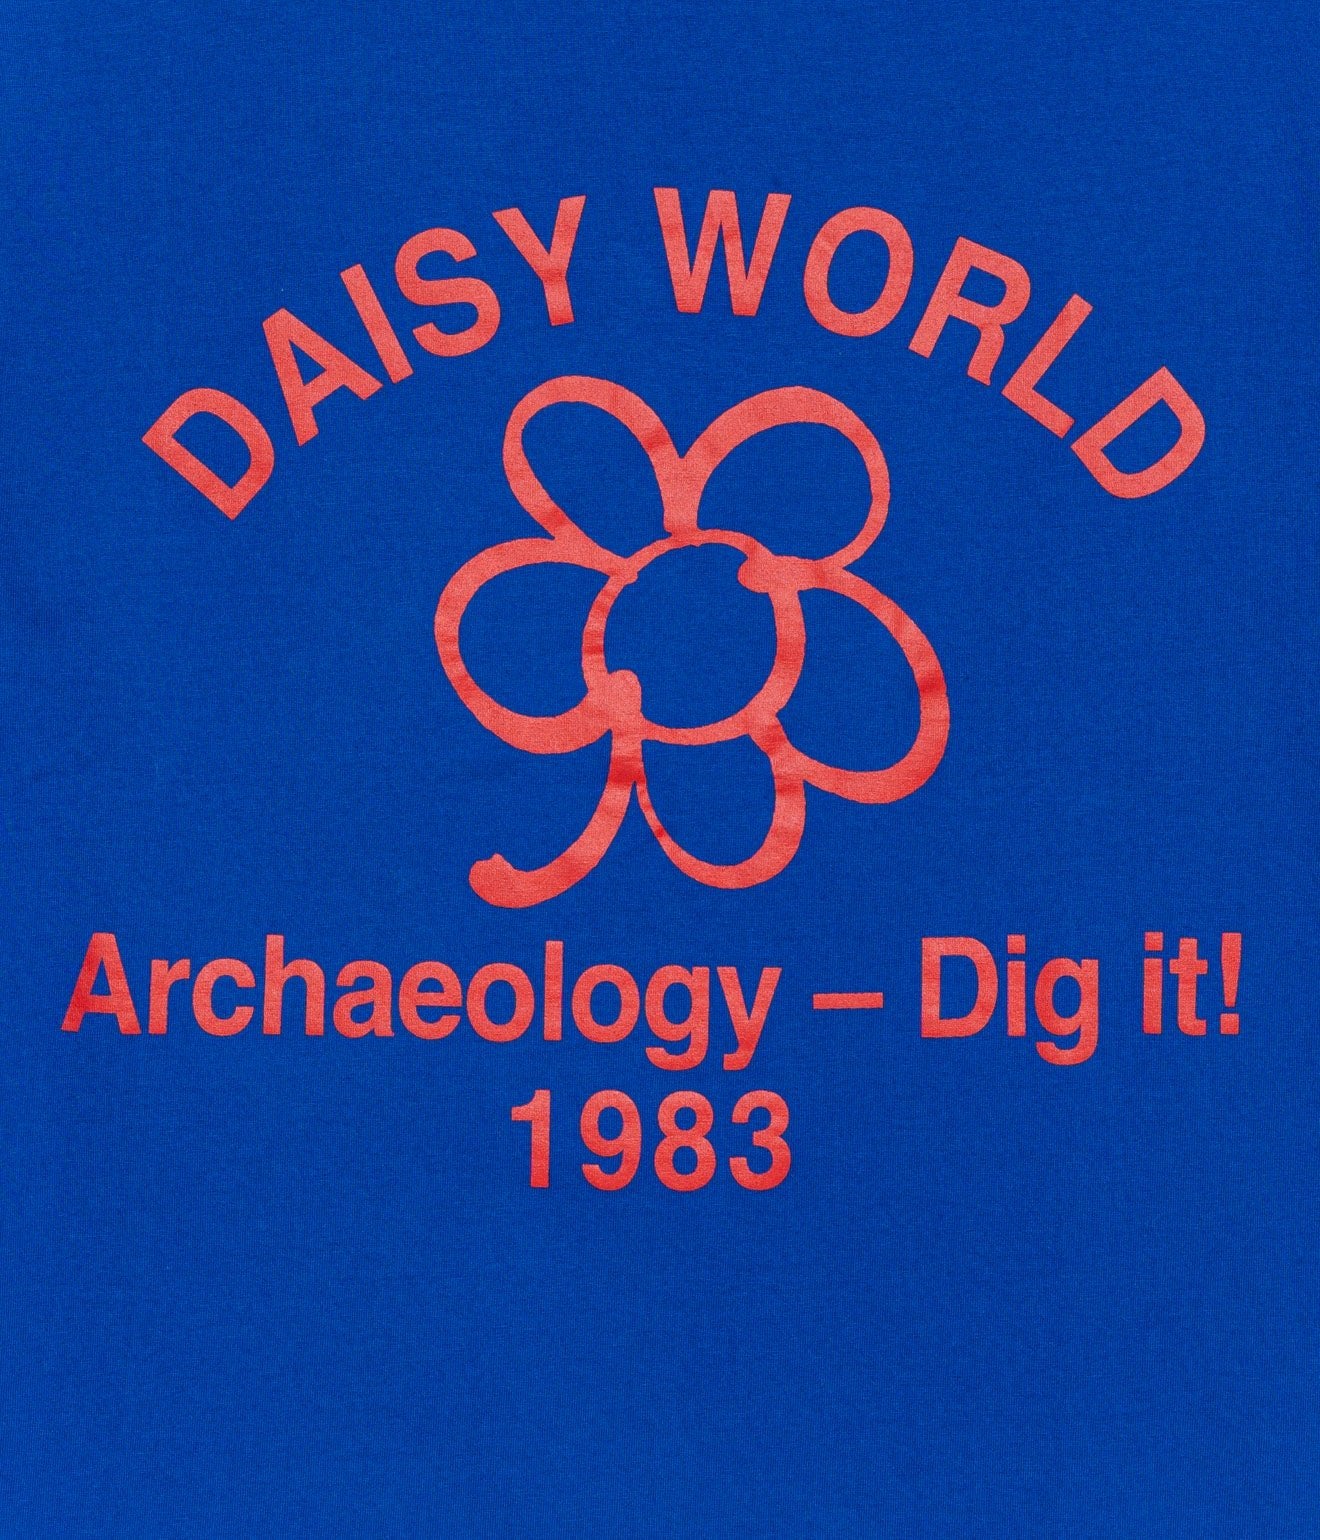 Public Possession "Daisyworld" T-Shirt - WEAREALLANIMALS